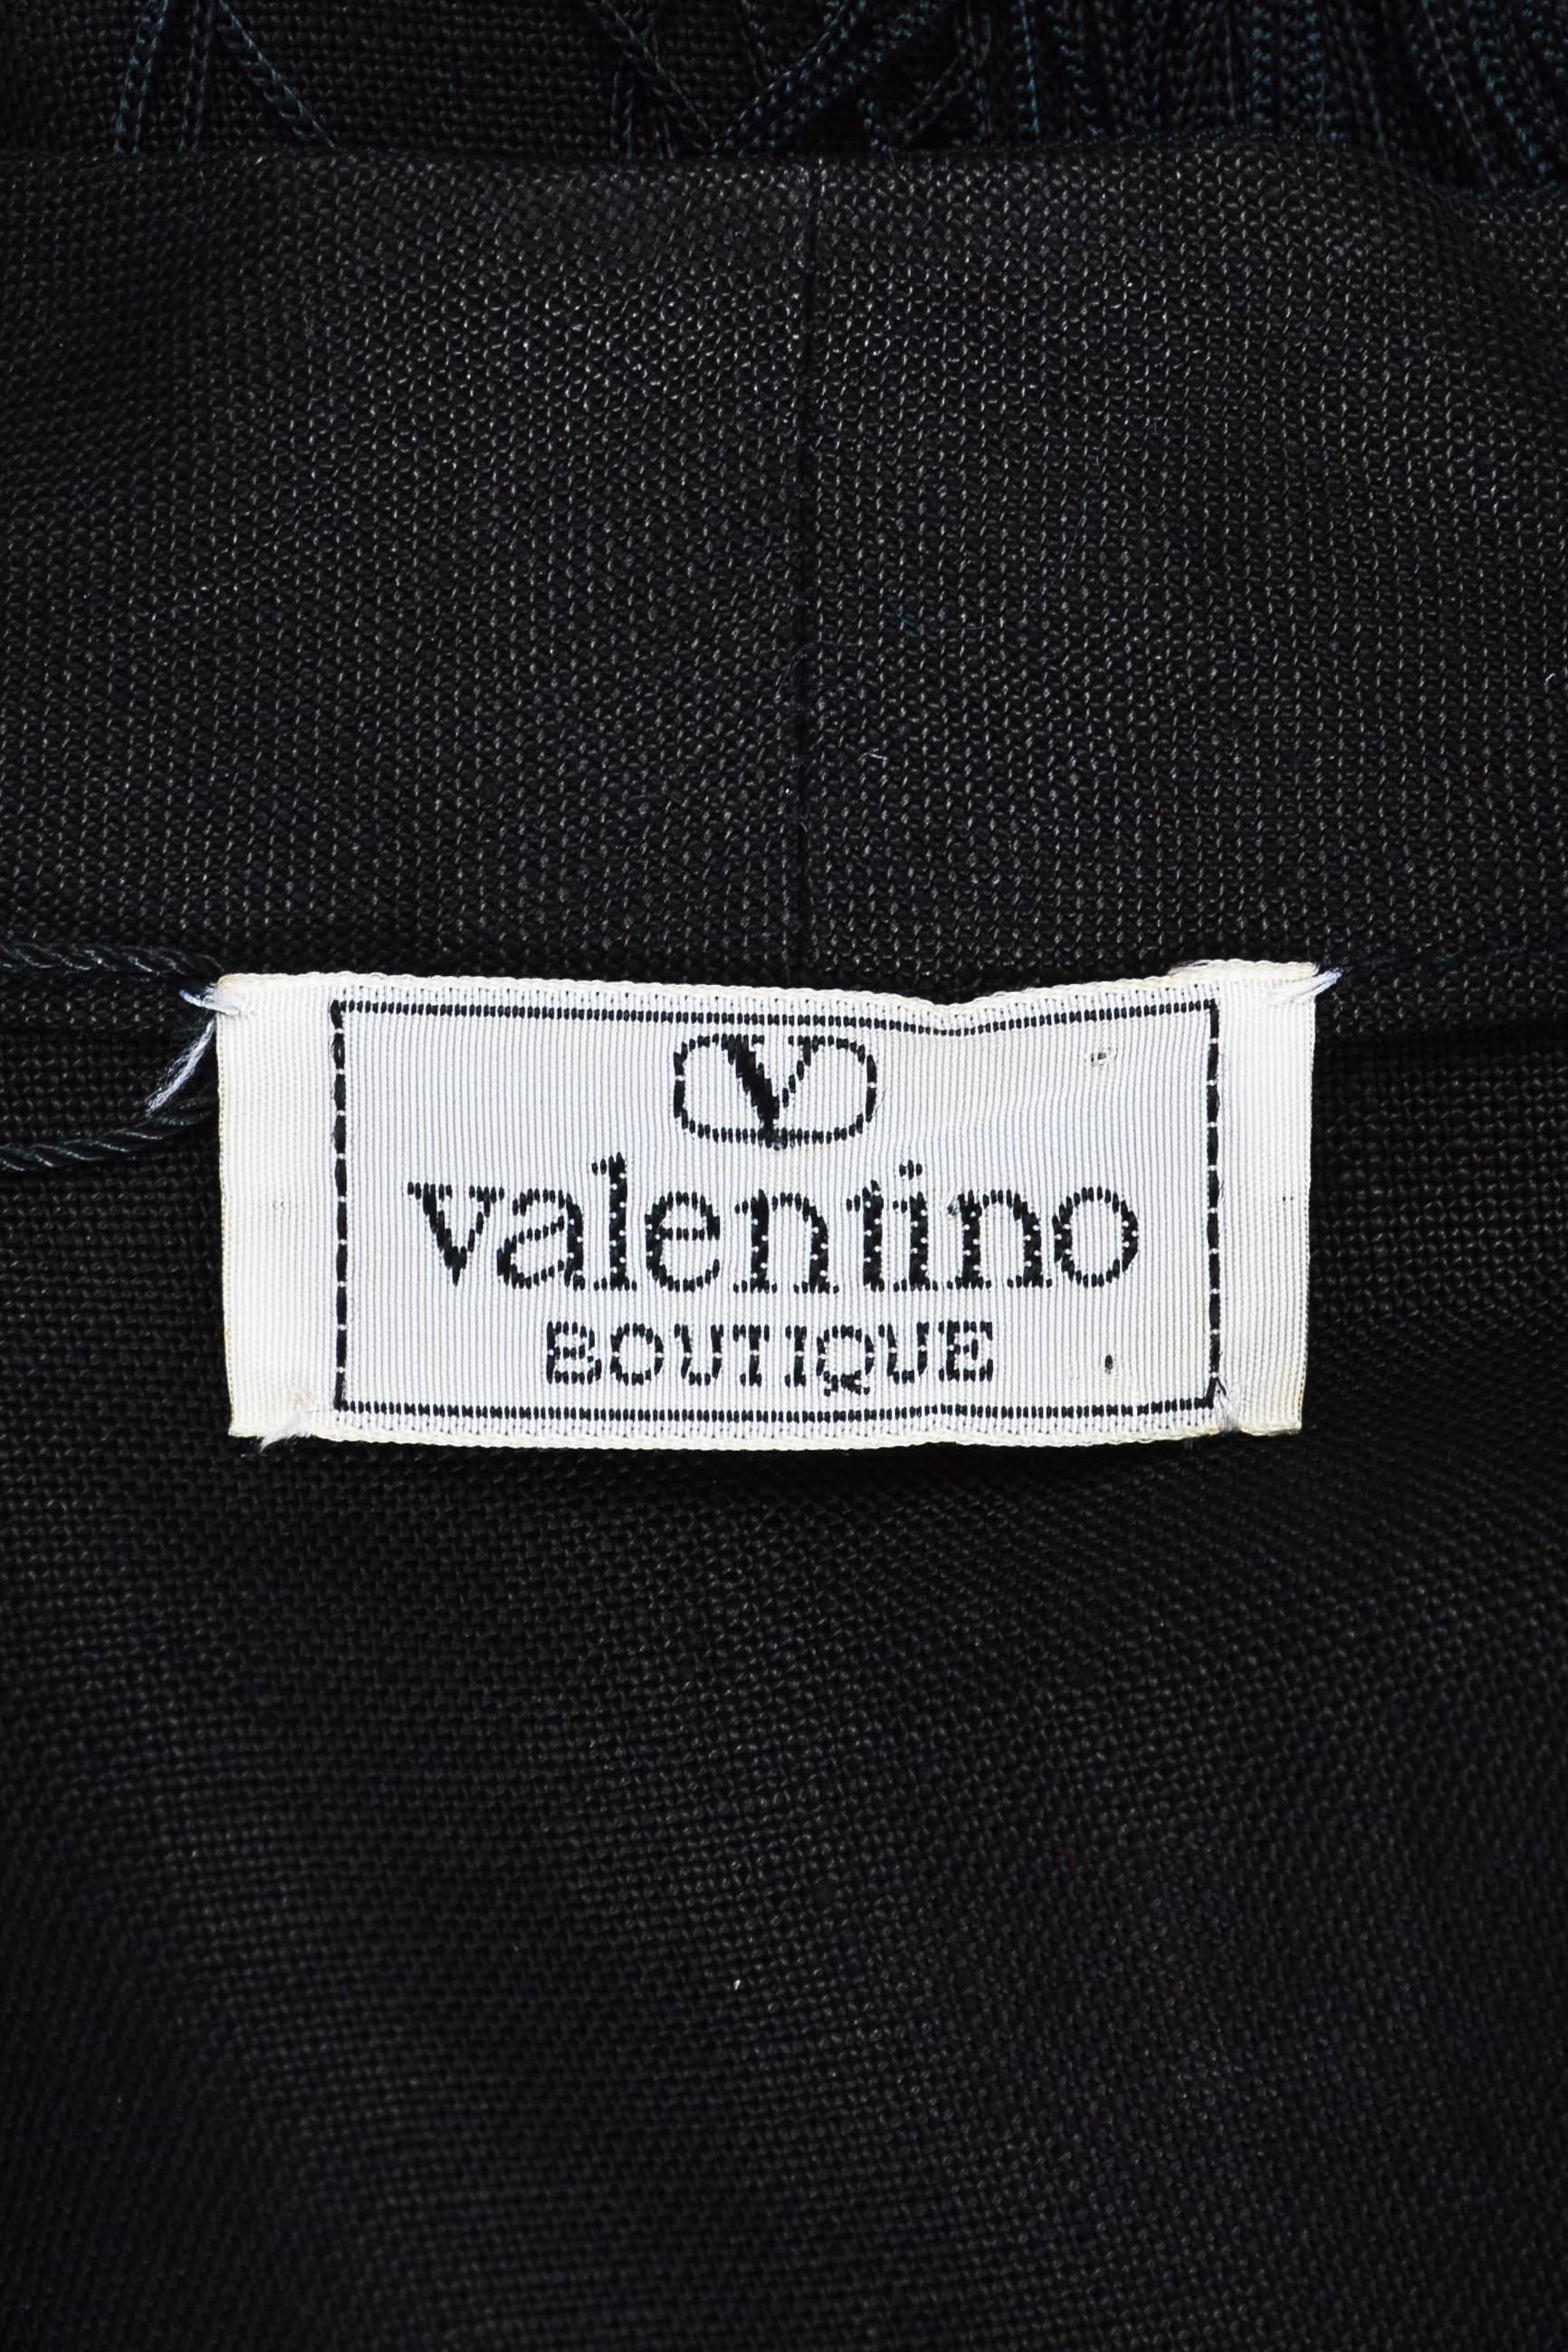 Vintage Valentino Boutique Black Woven Sheer Waist & Fringed Peplum Dress SZ 4 1